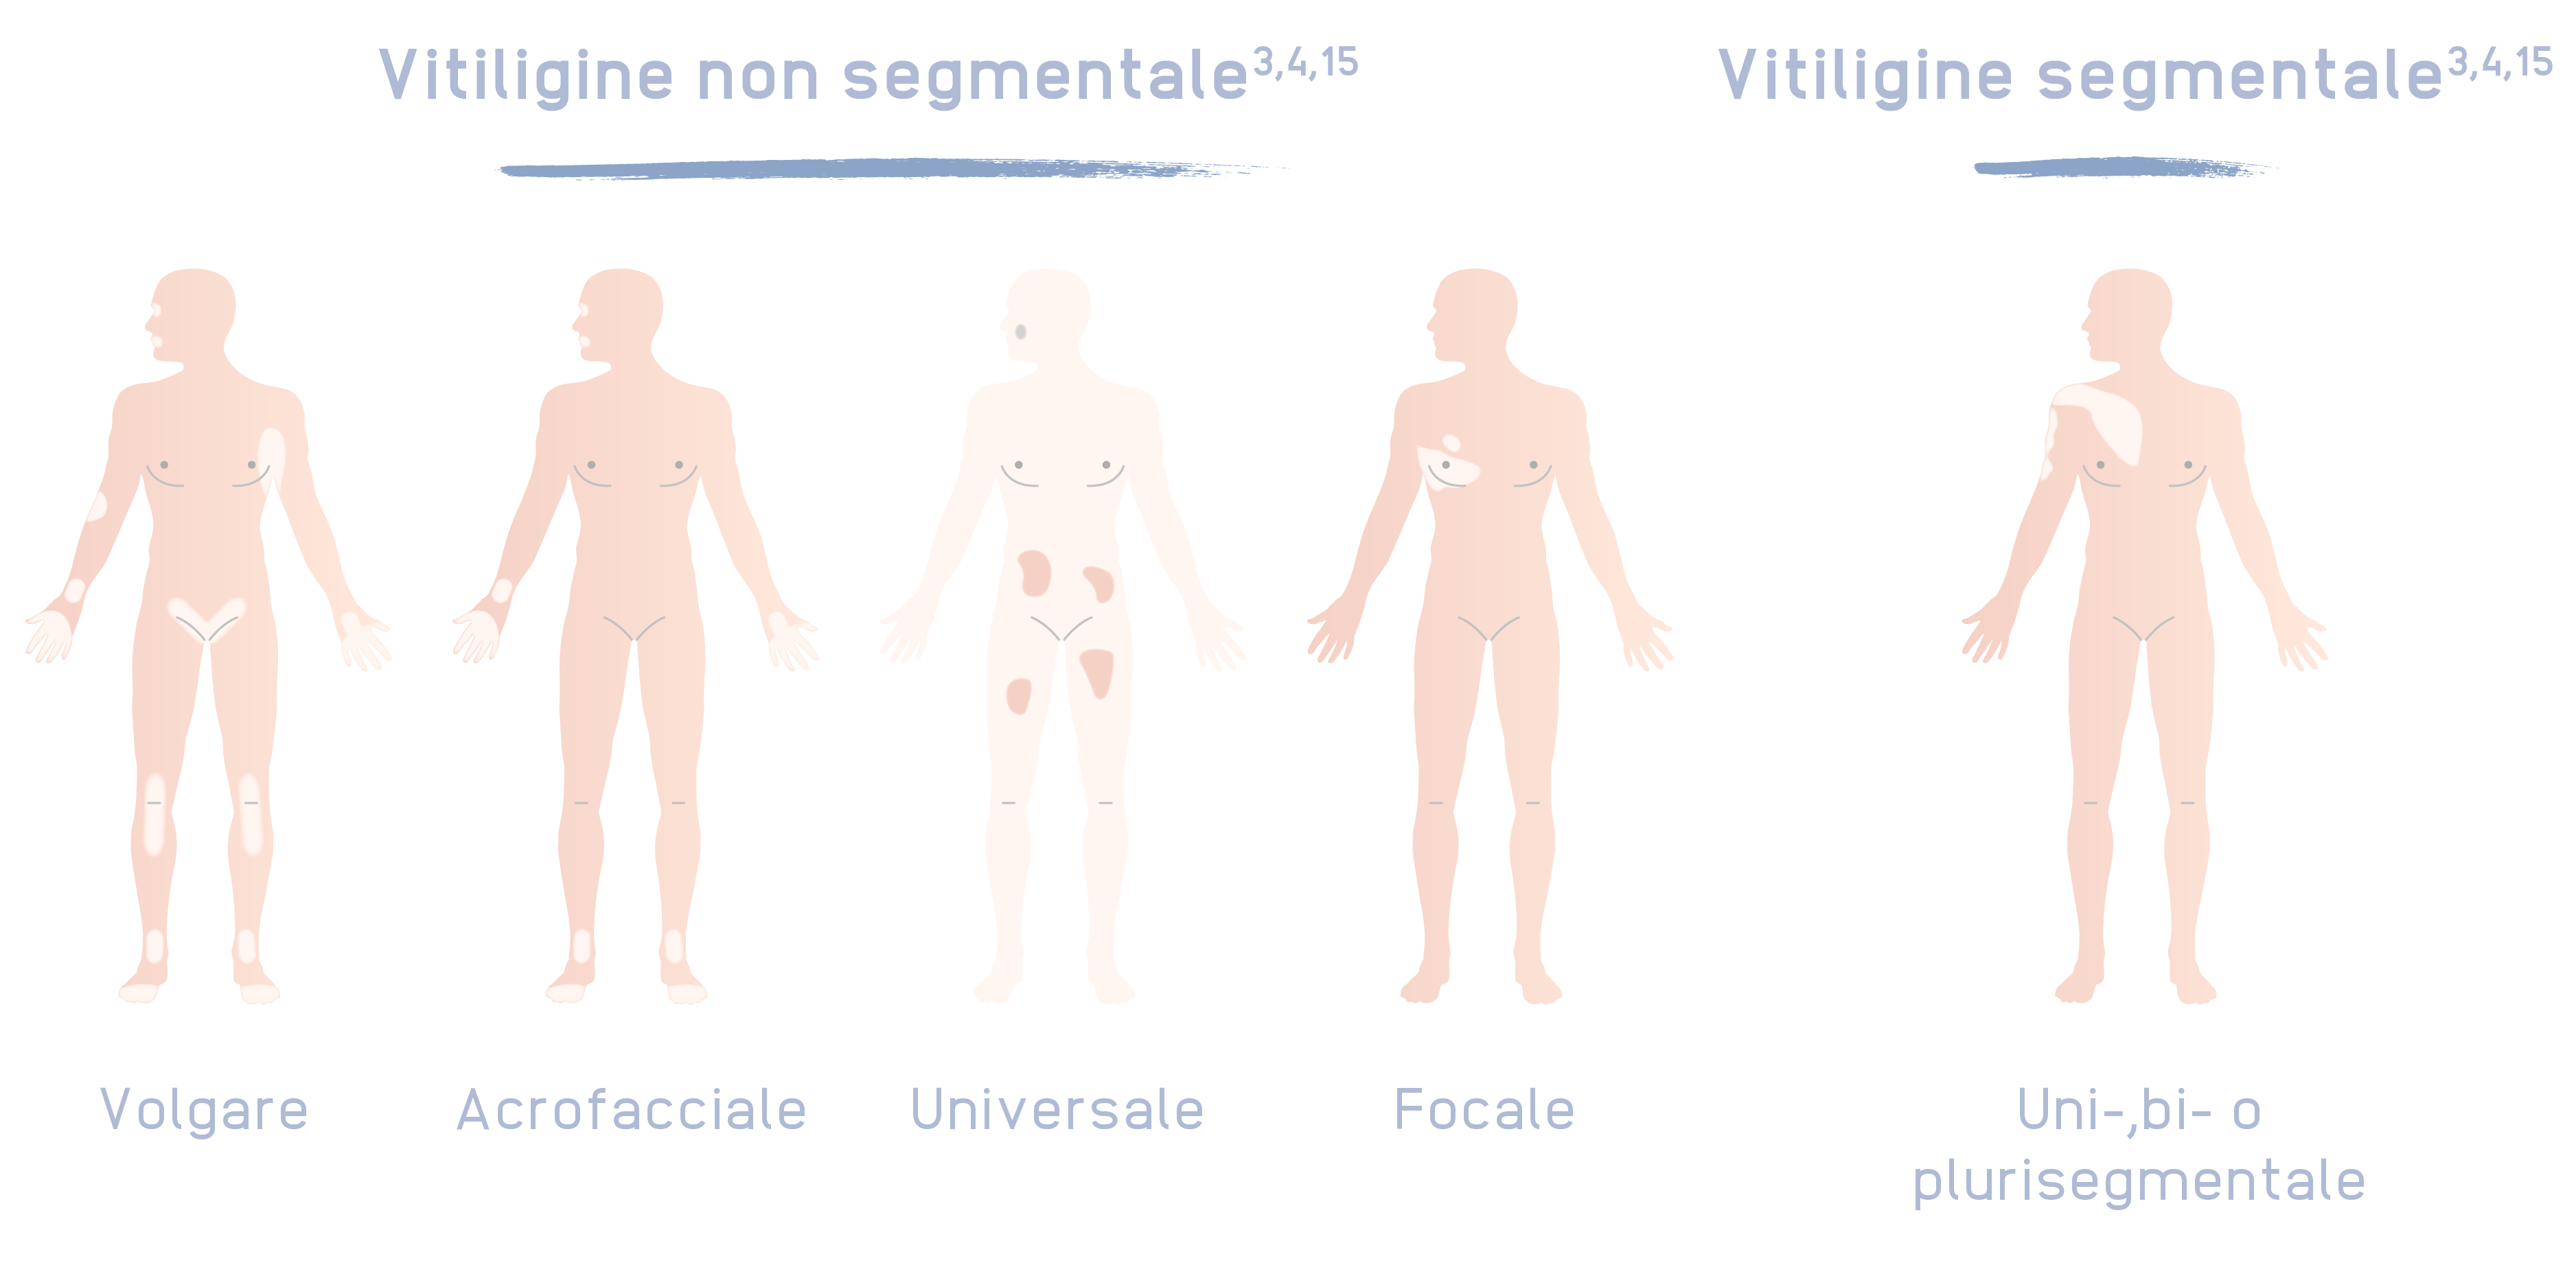 INT2213_Inctye_Vitiligo_Website_Graphics_Italian_R1V3_Non-Segmental_Desktop.png